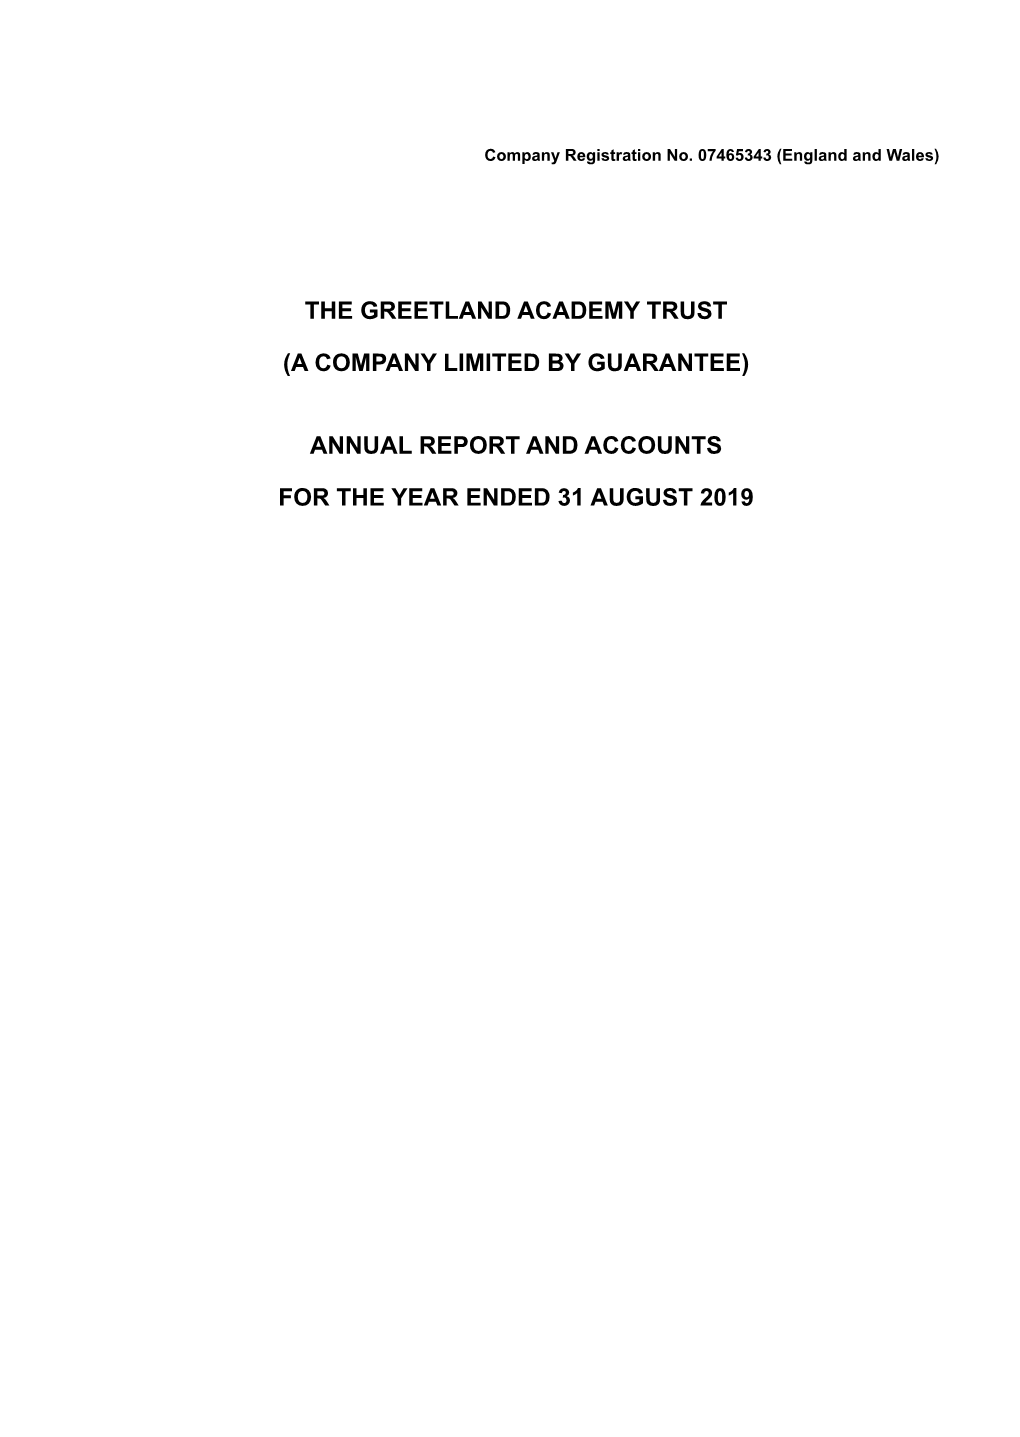 The Greetland Academy Trust